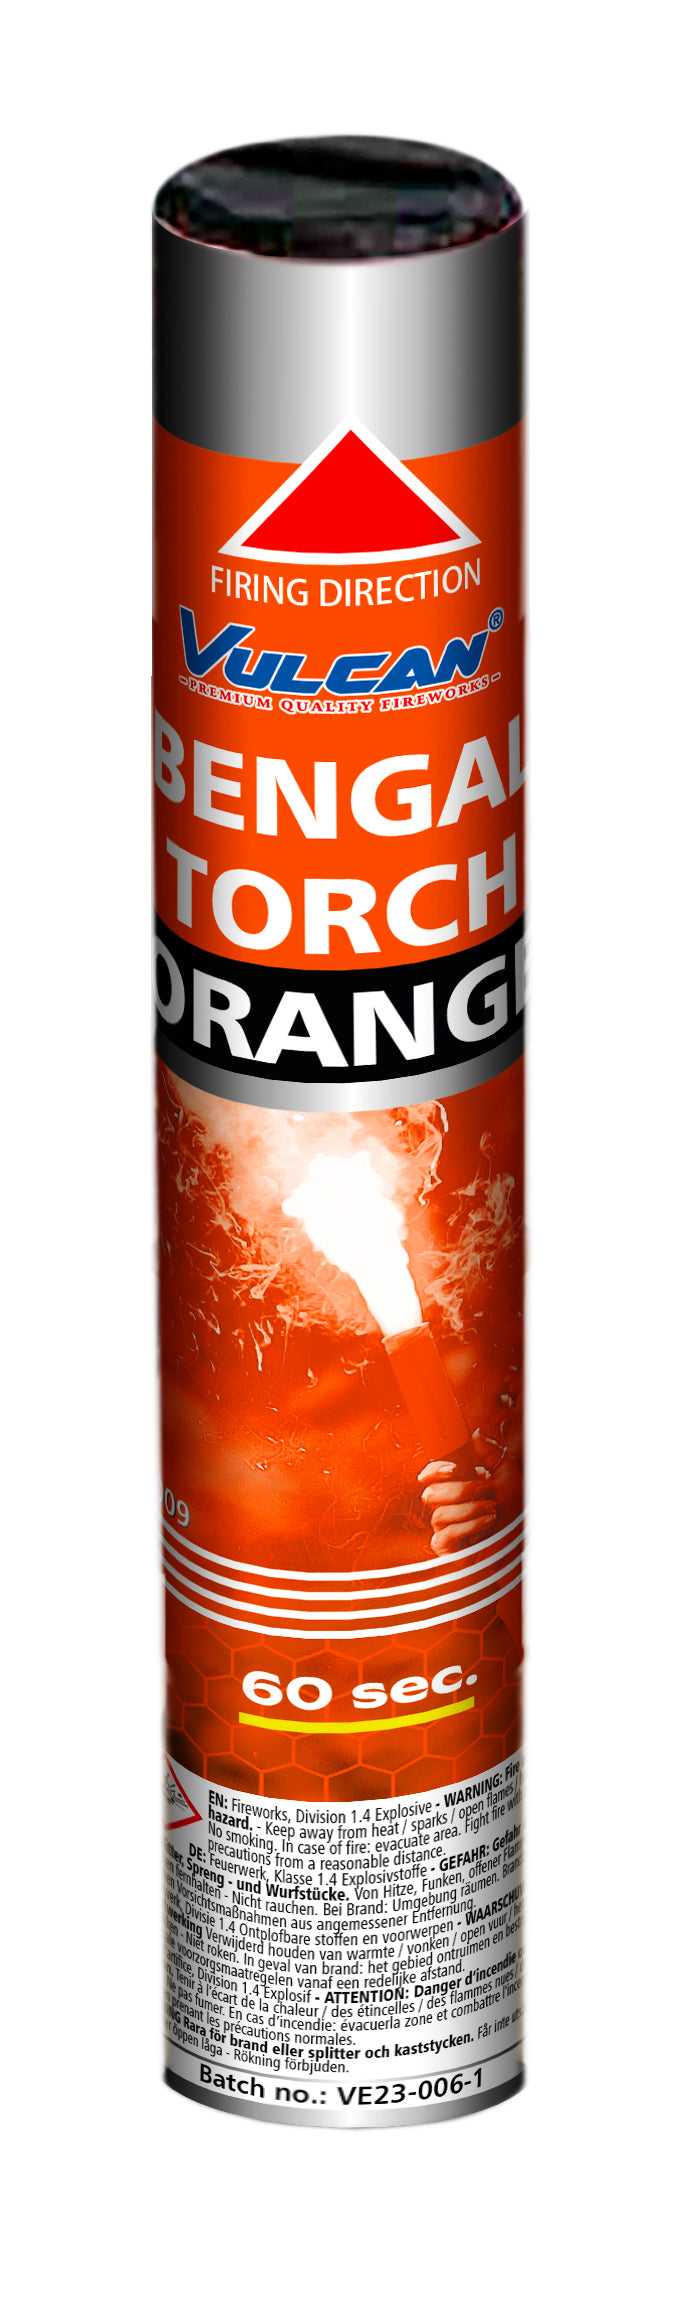 Bengal Torch Oranje